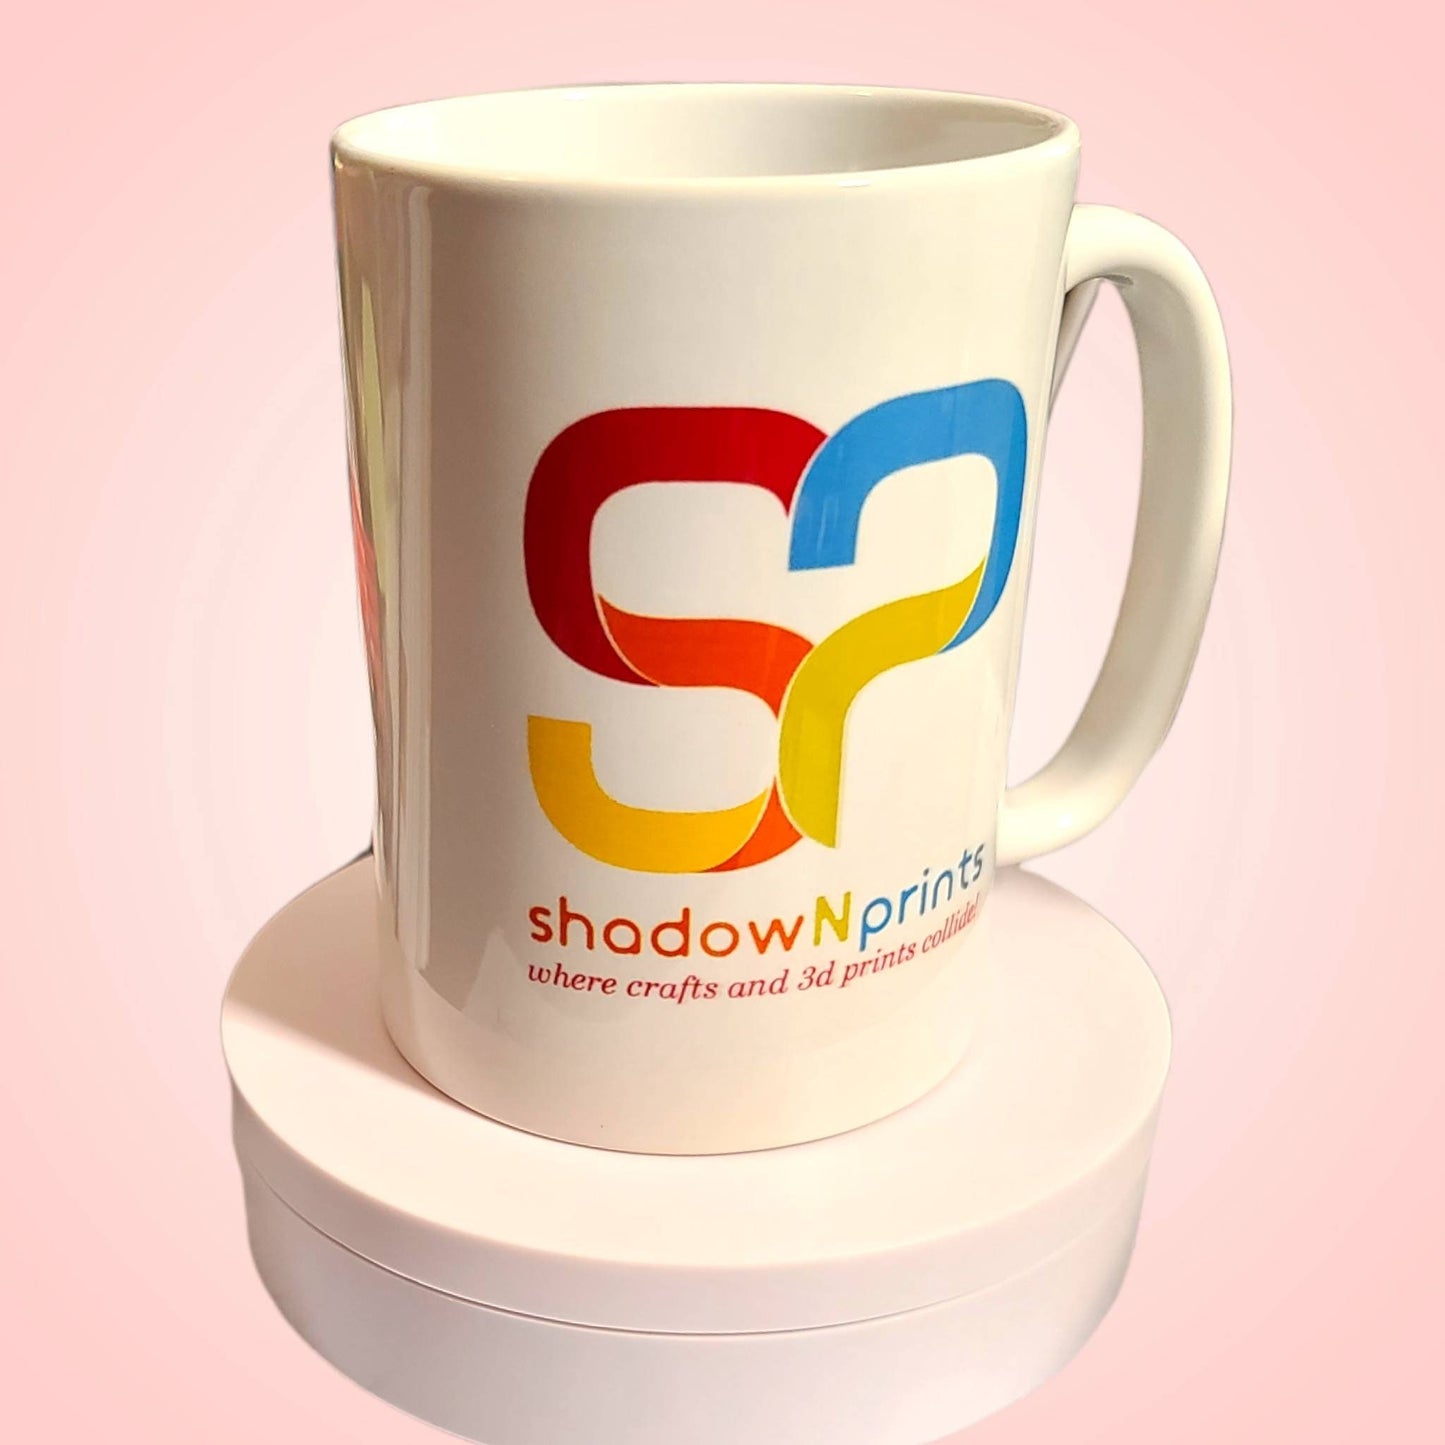 Business logo Mug, Customized business mug, shadowNprints, logo mug, Personalized business coffee cup, branded mug, small business